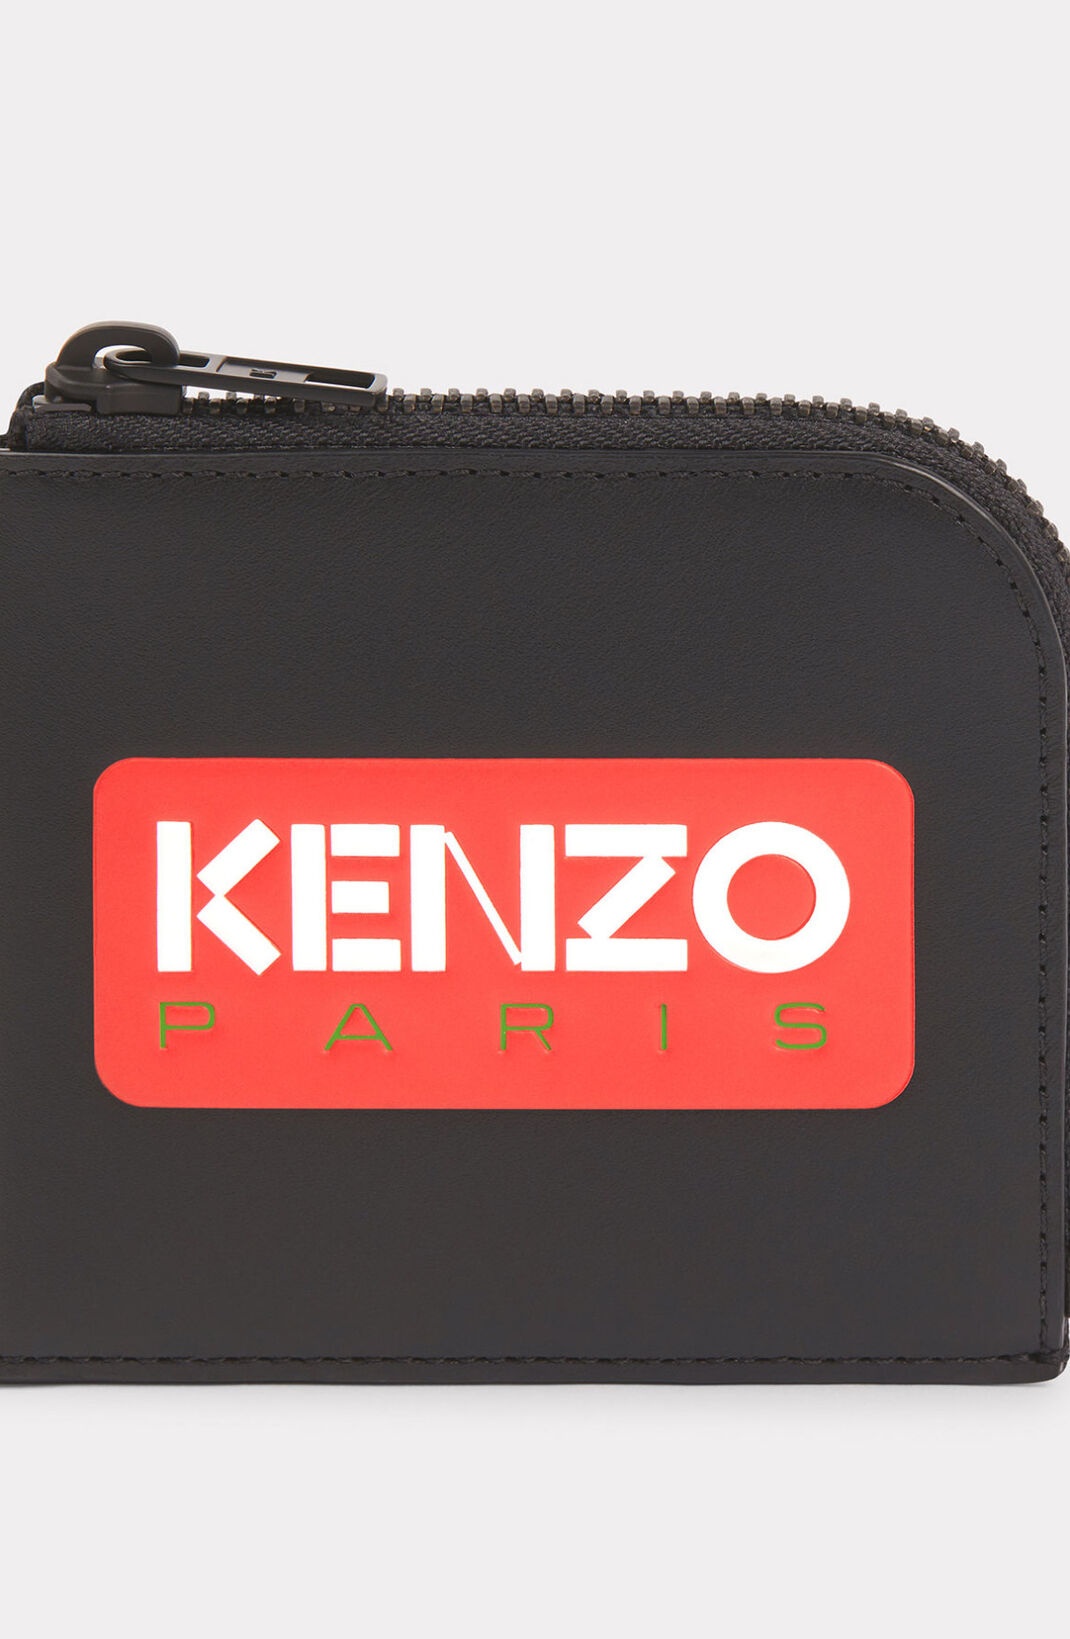 KENZO Paris leather wallet - 3